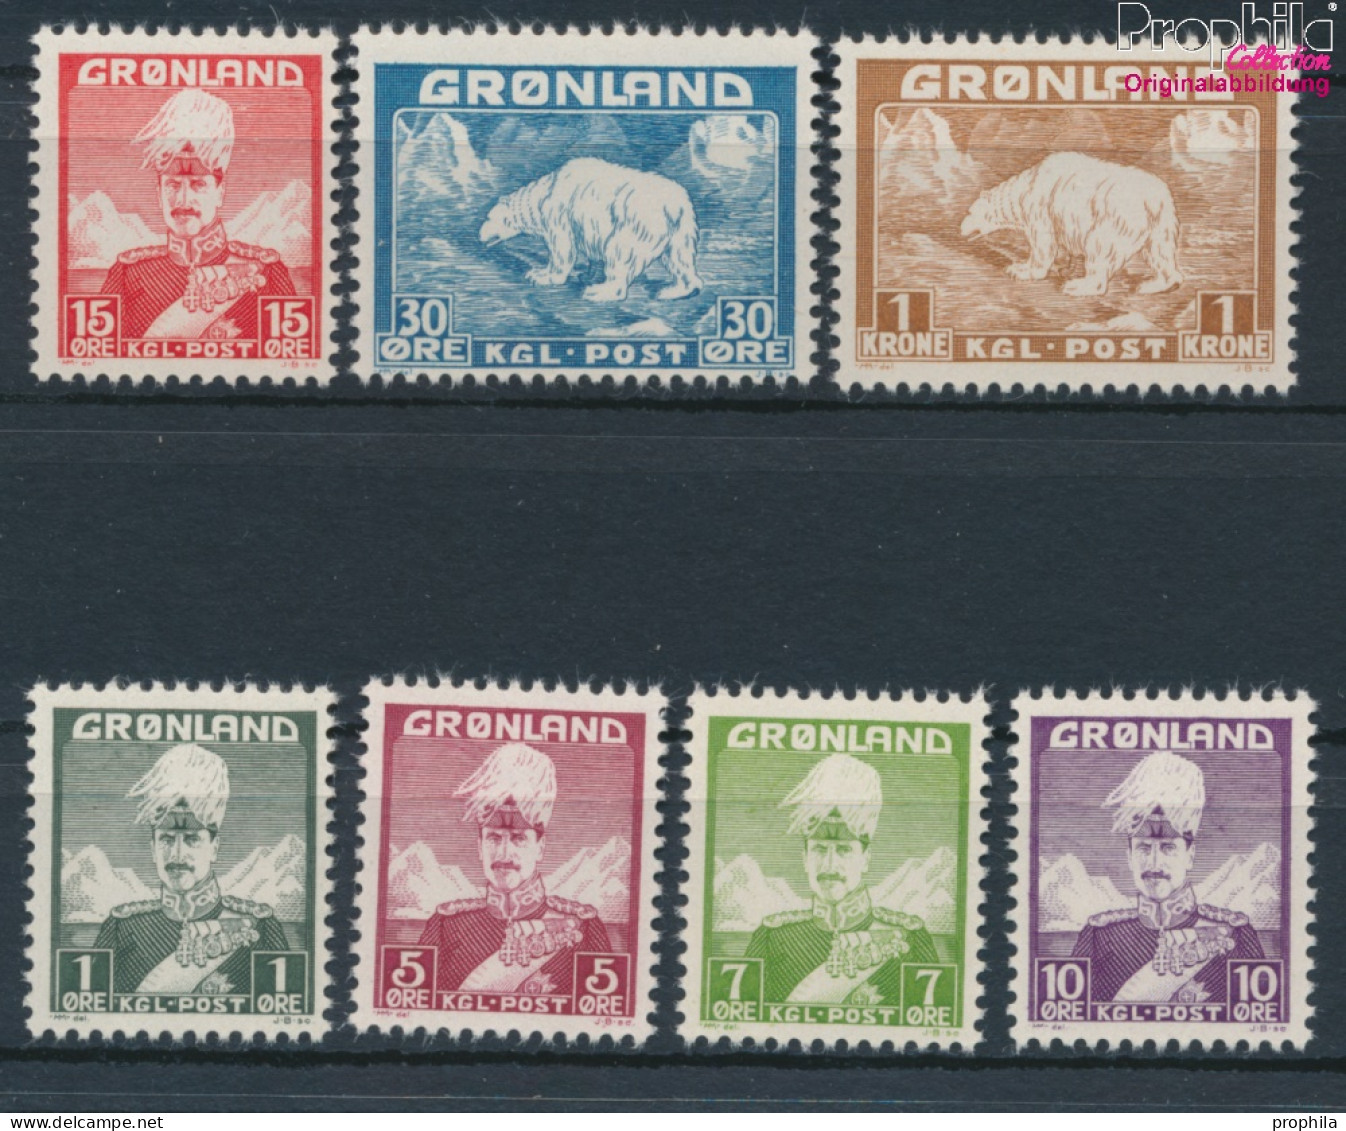 Dänemark - Grönland Postfrisch Christian X. 1938 König Christian X.  (10174221 - Used Stamps